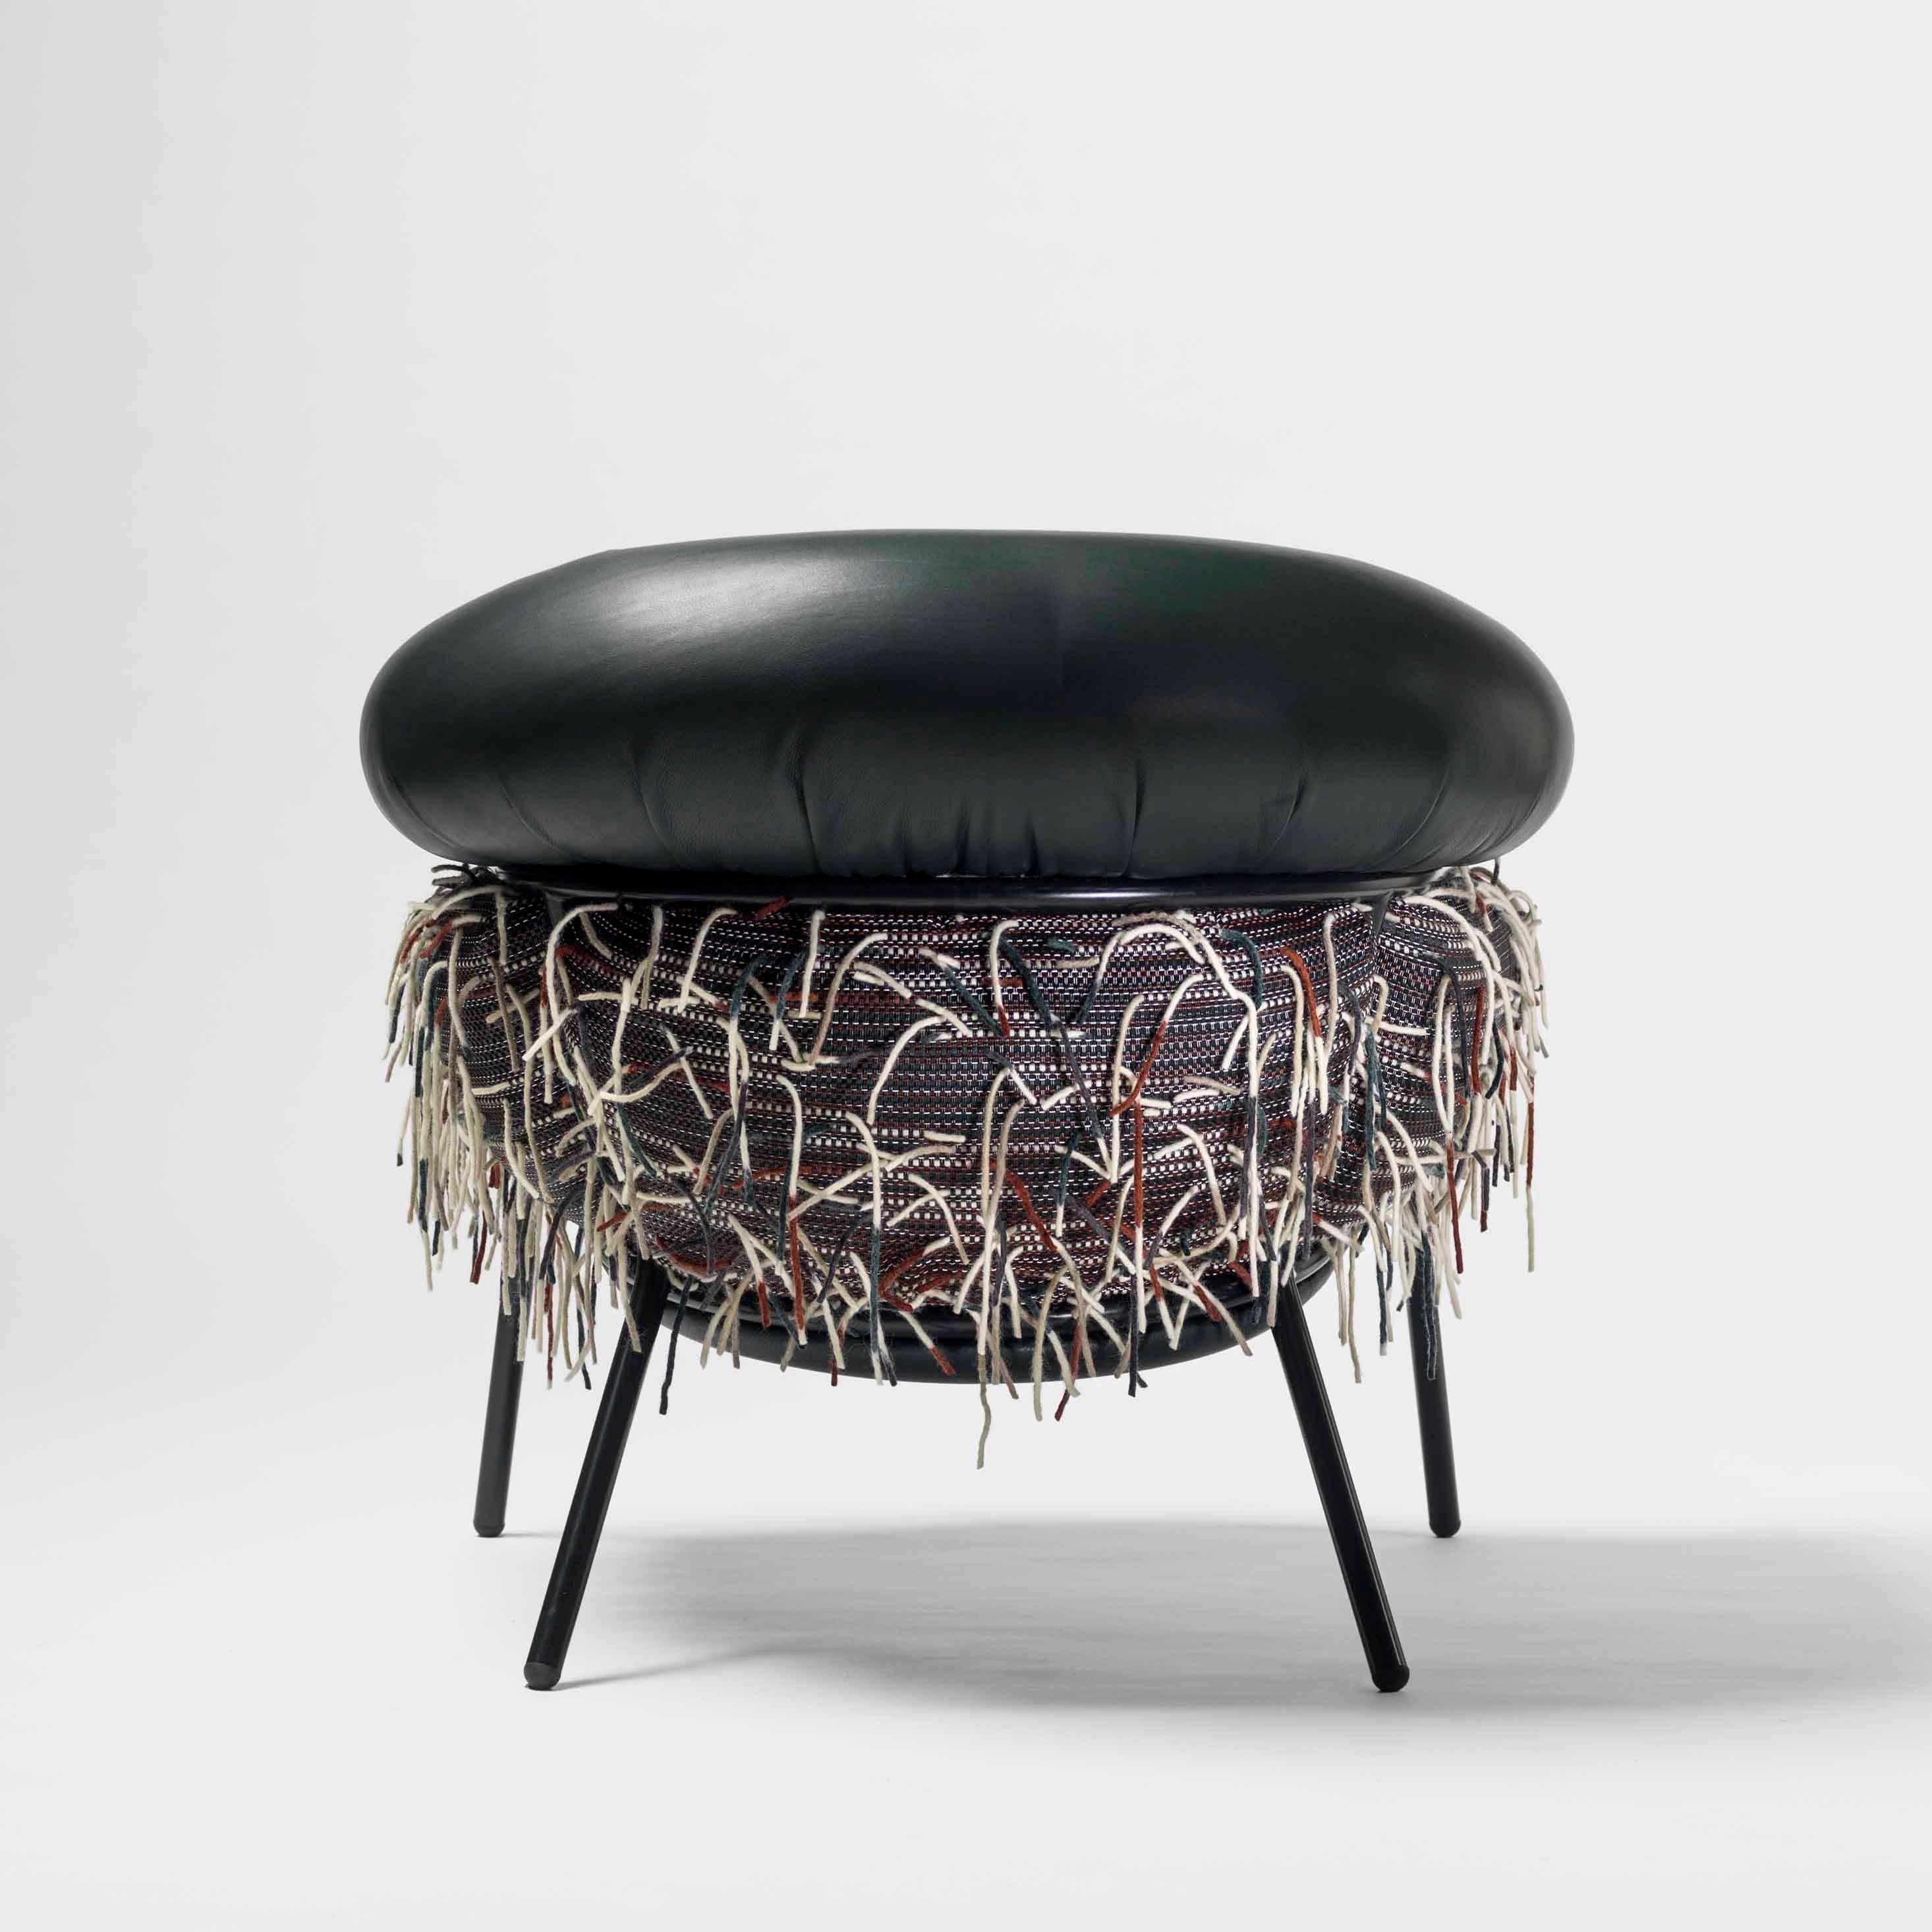 Modern Grasso Armchair by Stephen Burks